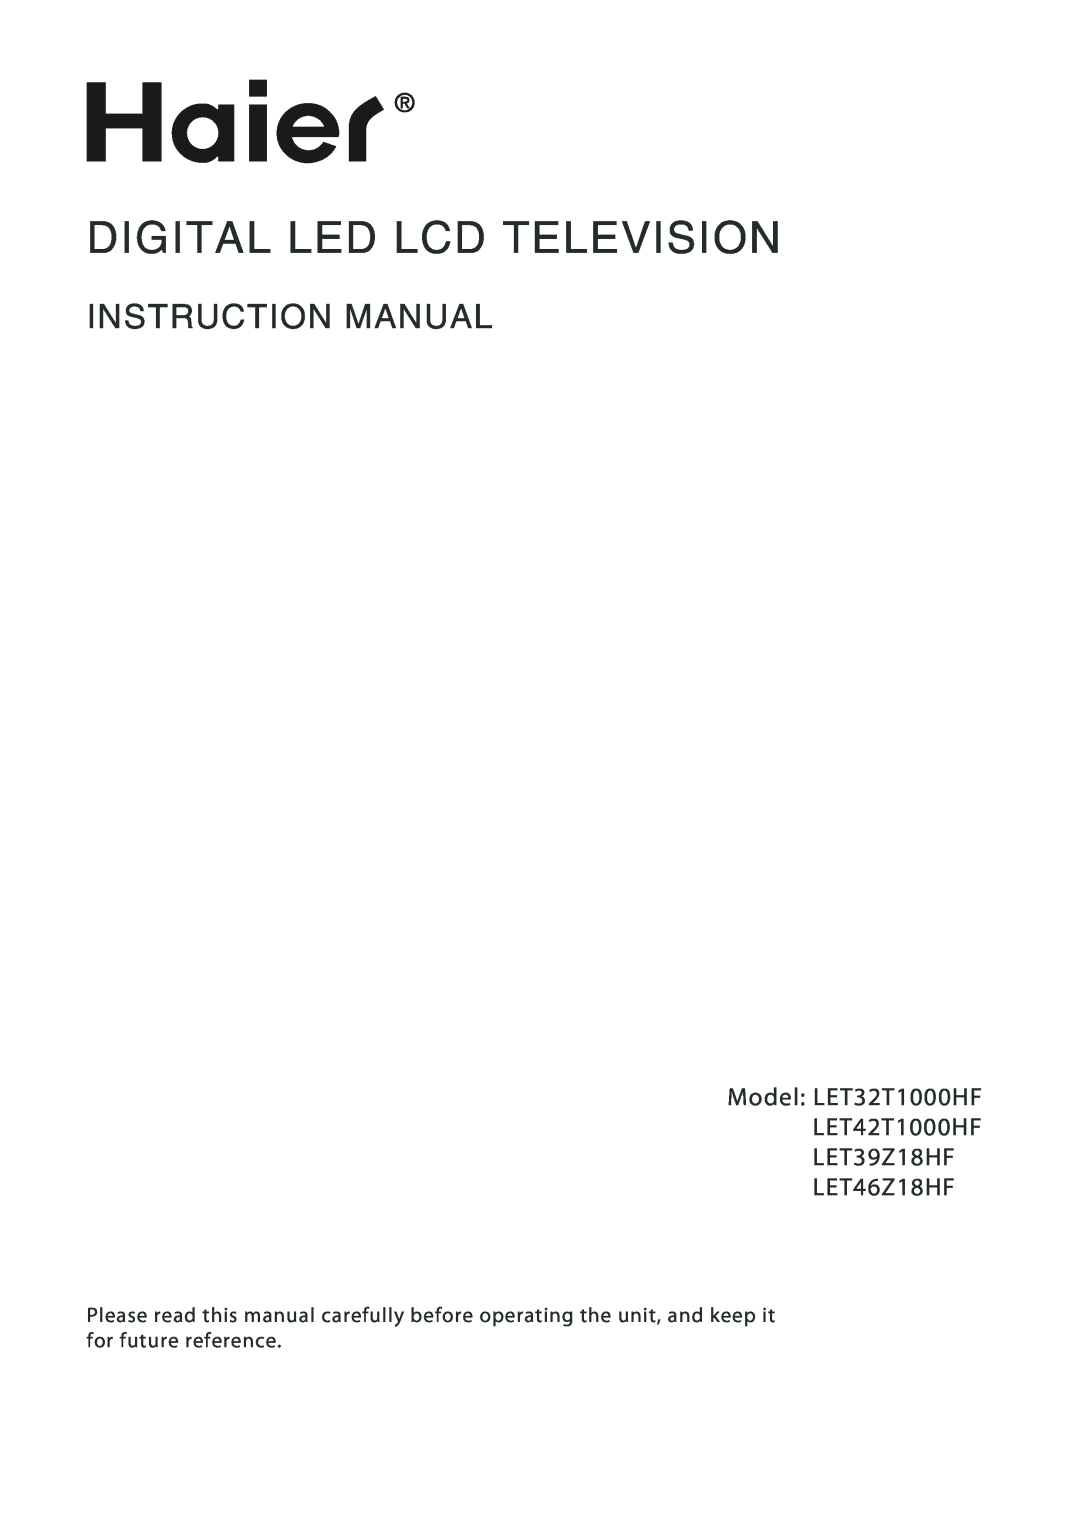 Haier instruction manual Digital Led Lcd Television, Model LET32T1000HF LET42T1000HF LET39Z18HF LET46Z18HF 